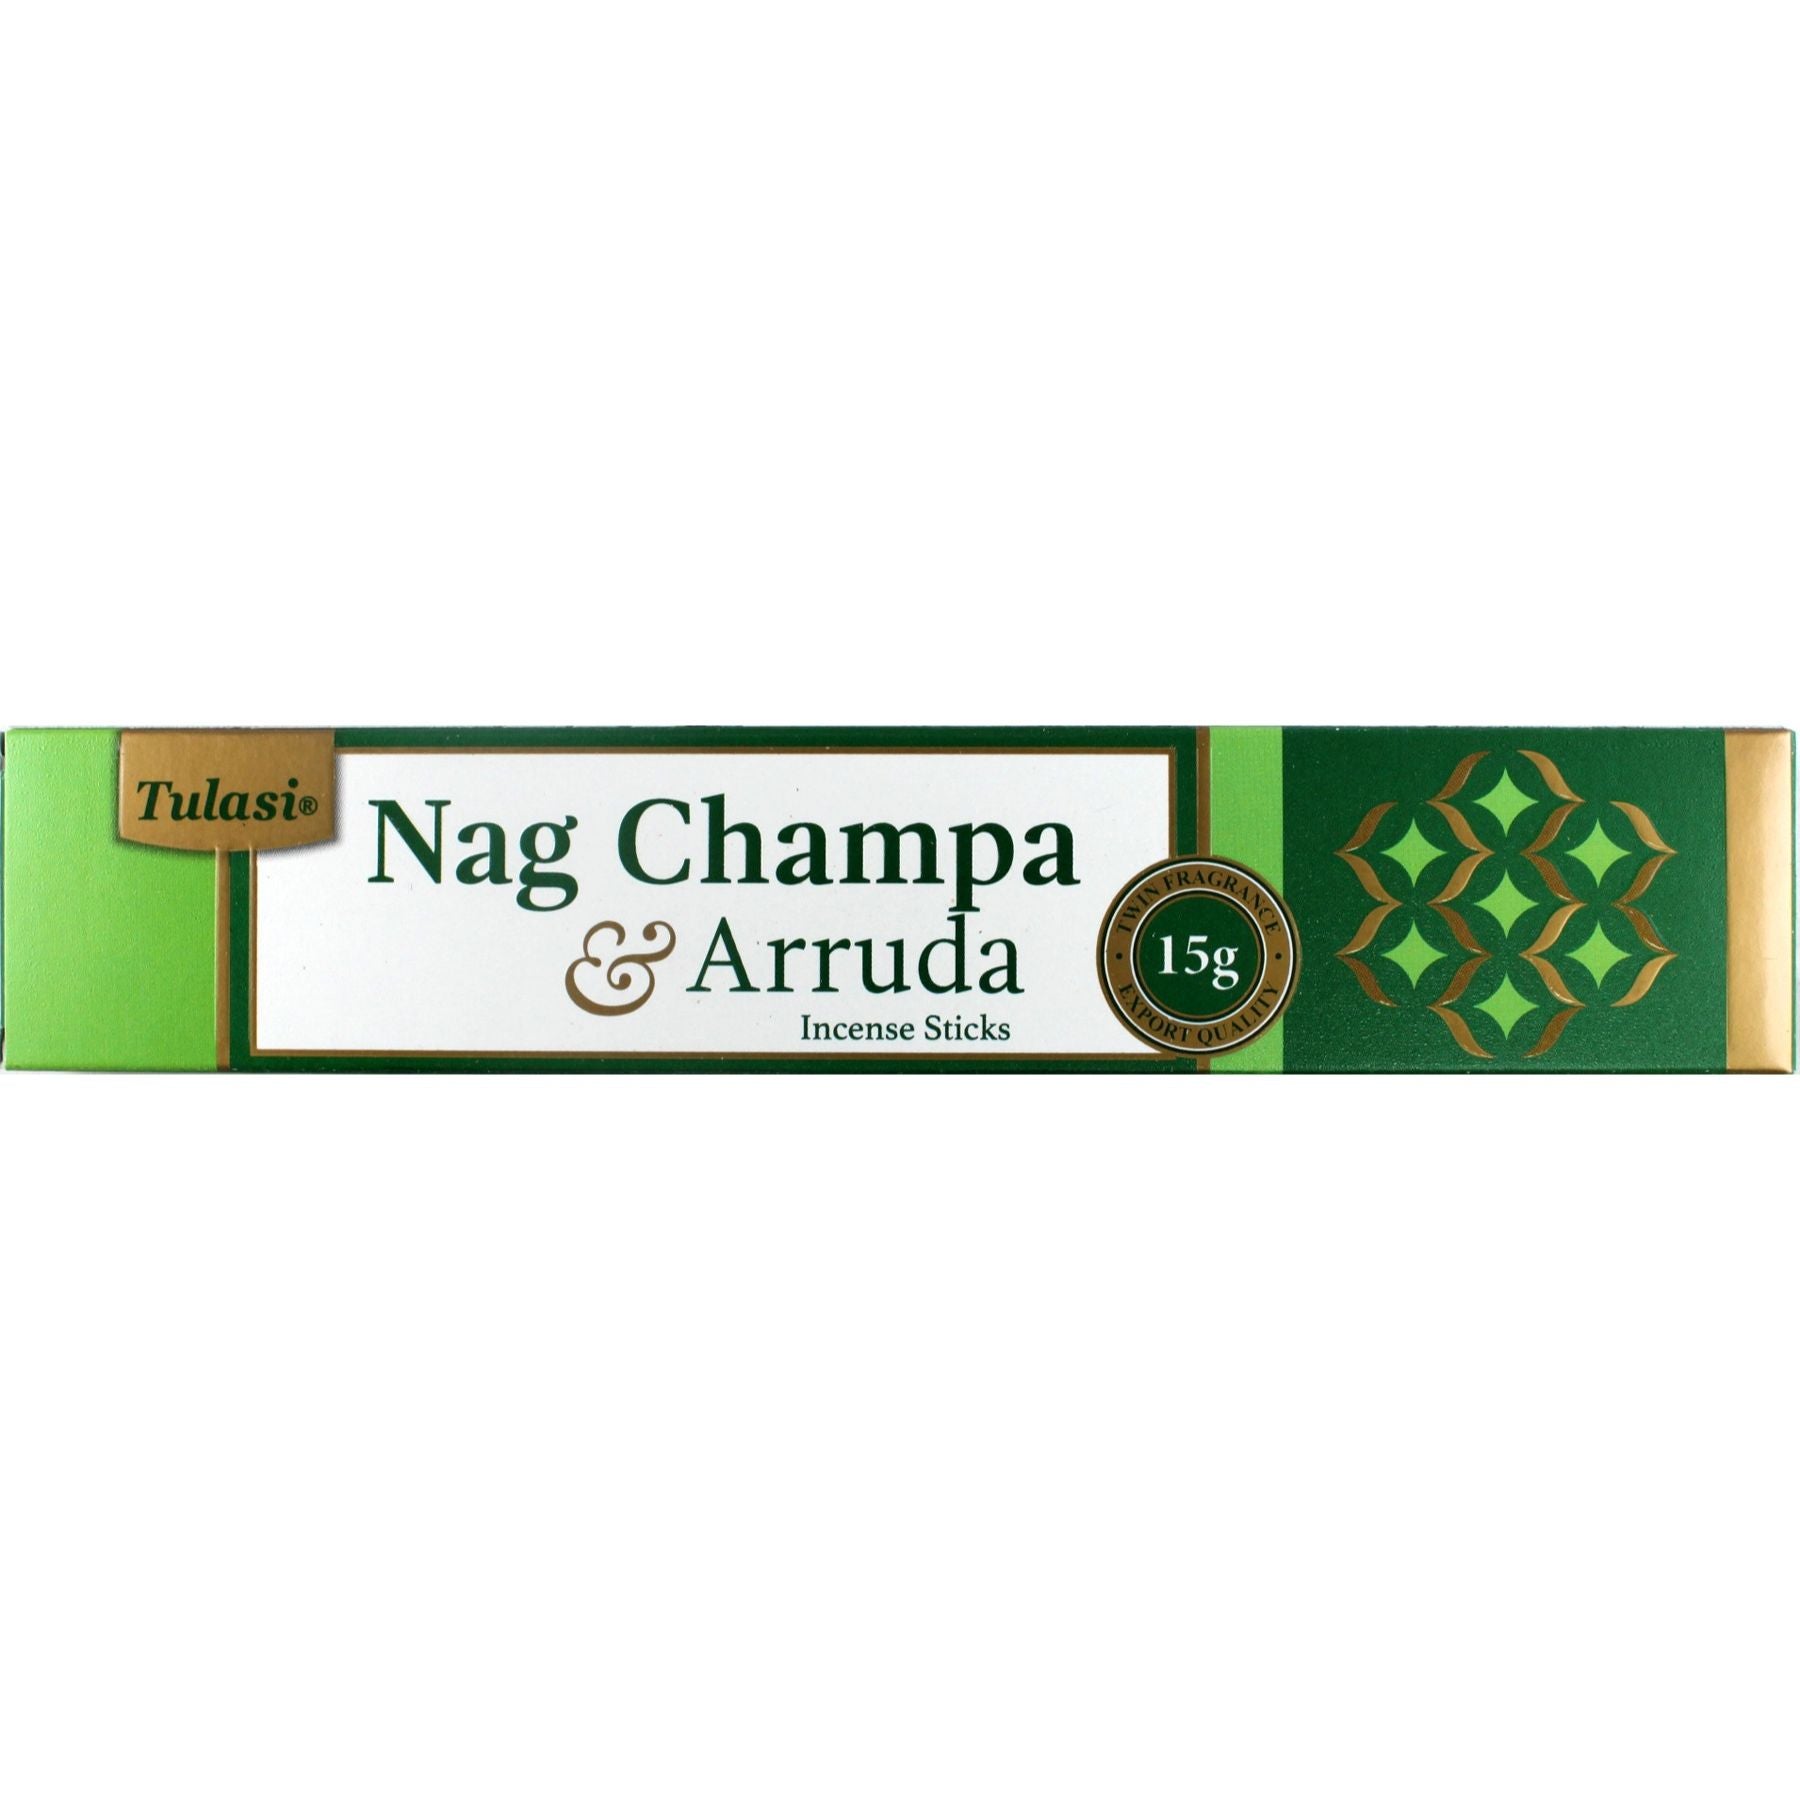 Nag Champa - 15g – Earth House